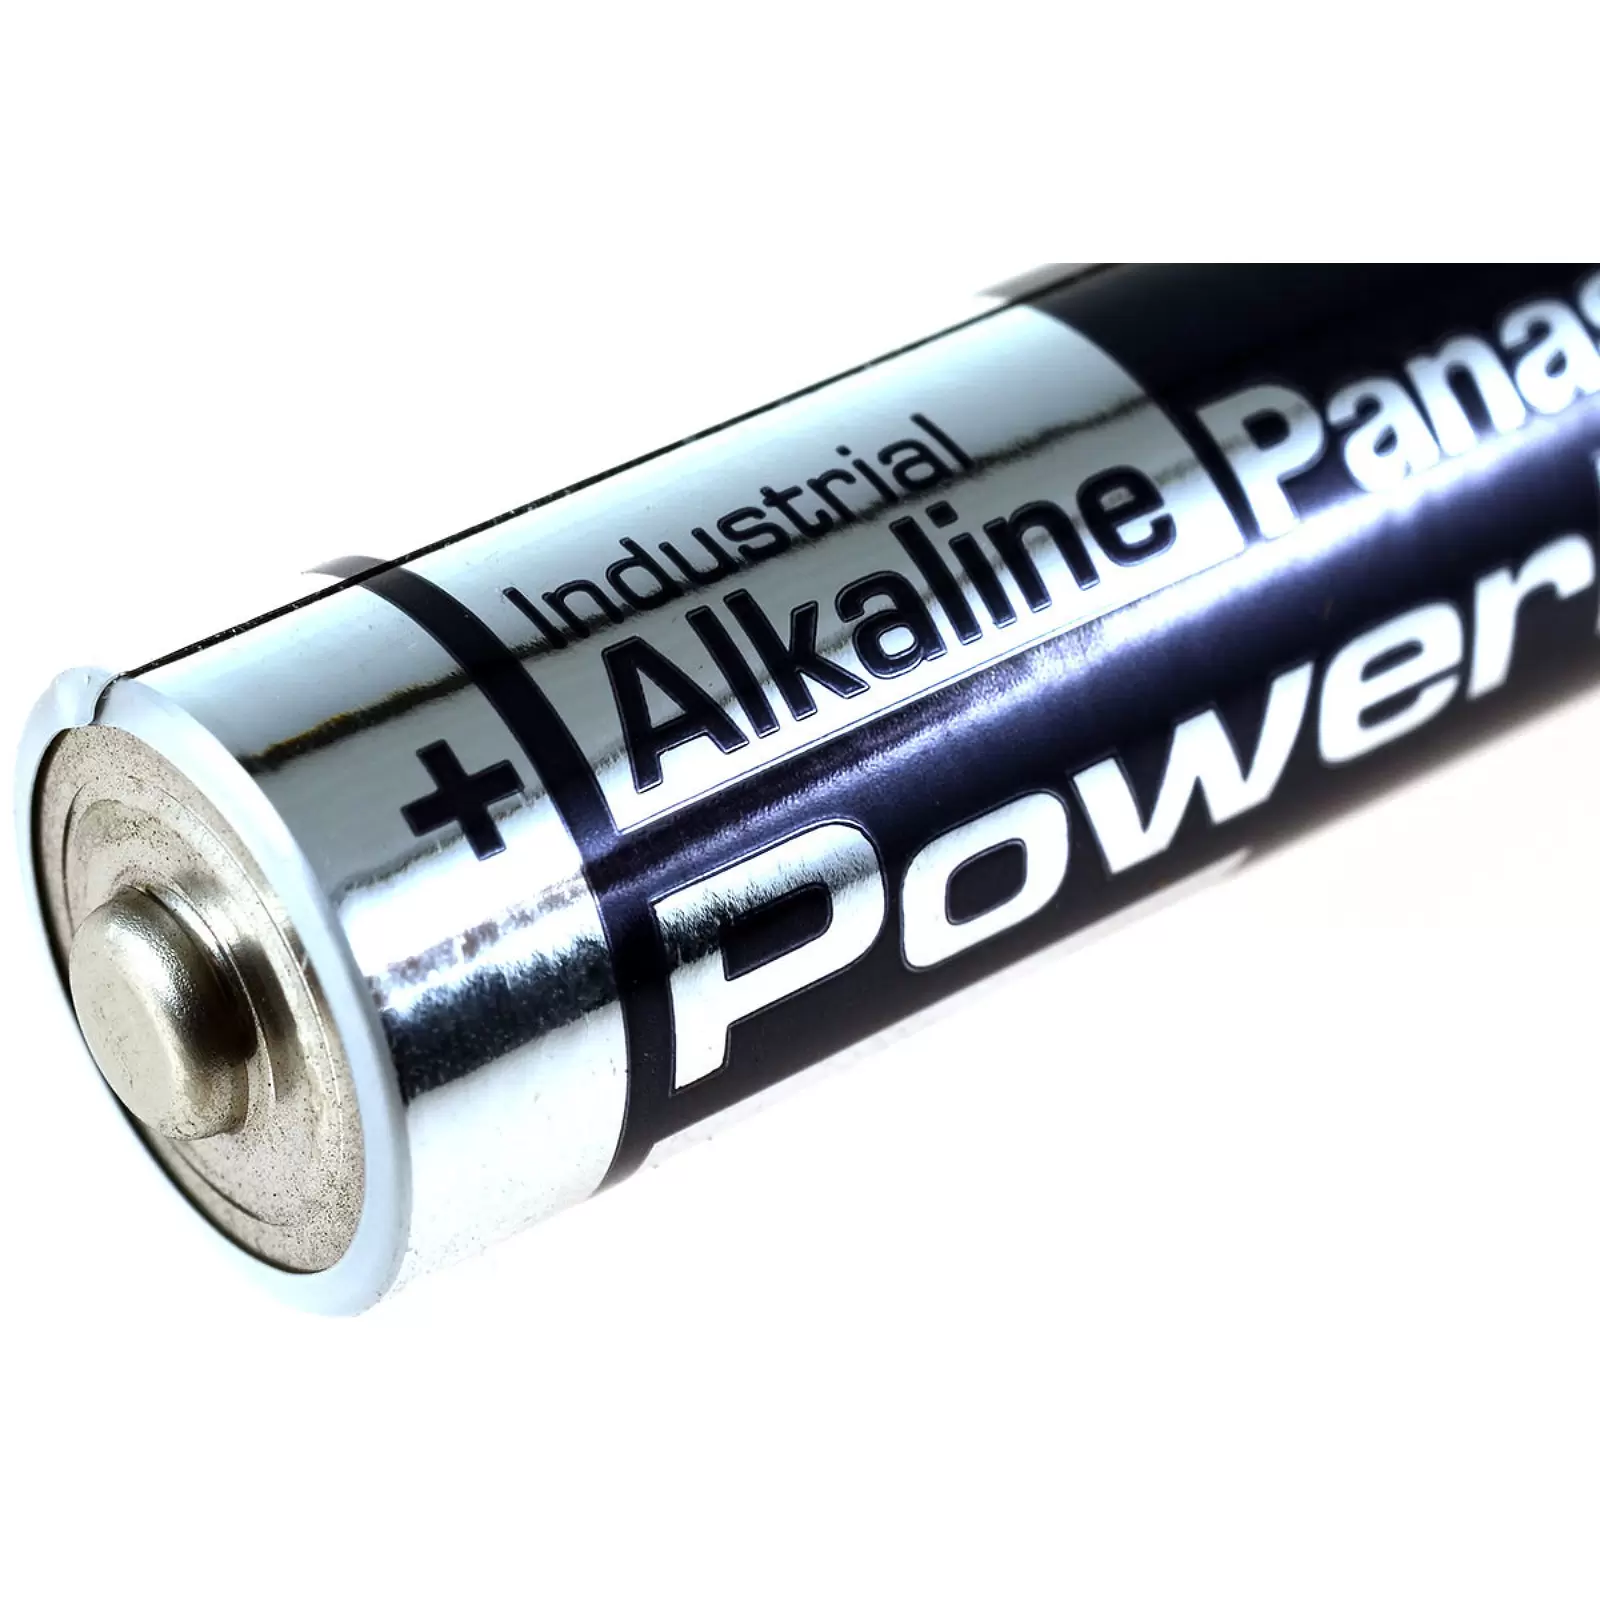 Panasonic Powerline Industrial Alkaline AA LR6AD LR6 M 1,5V 10er Pack